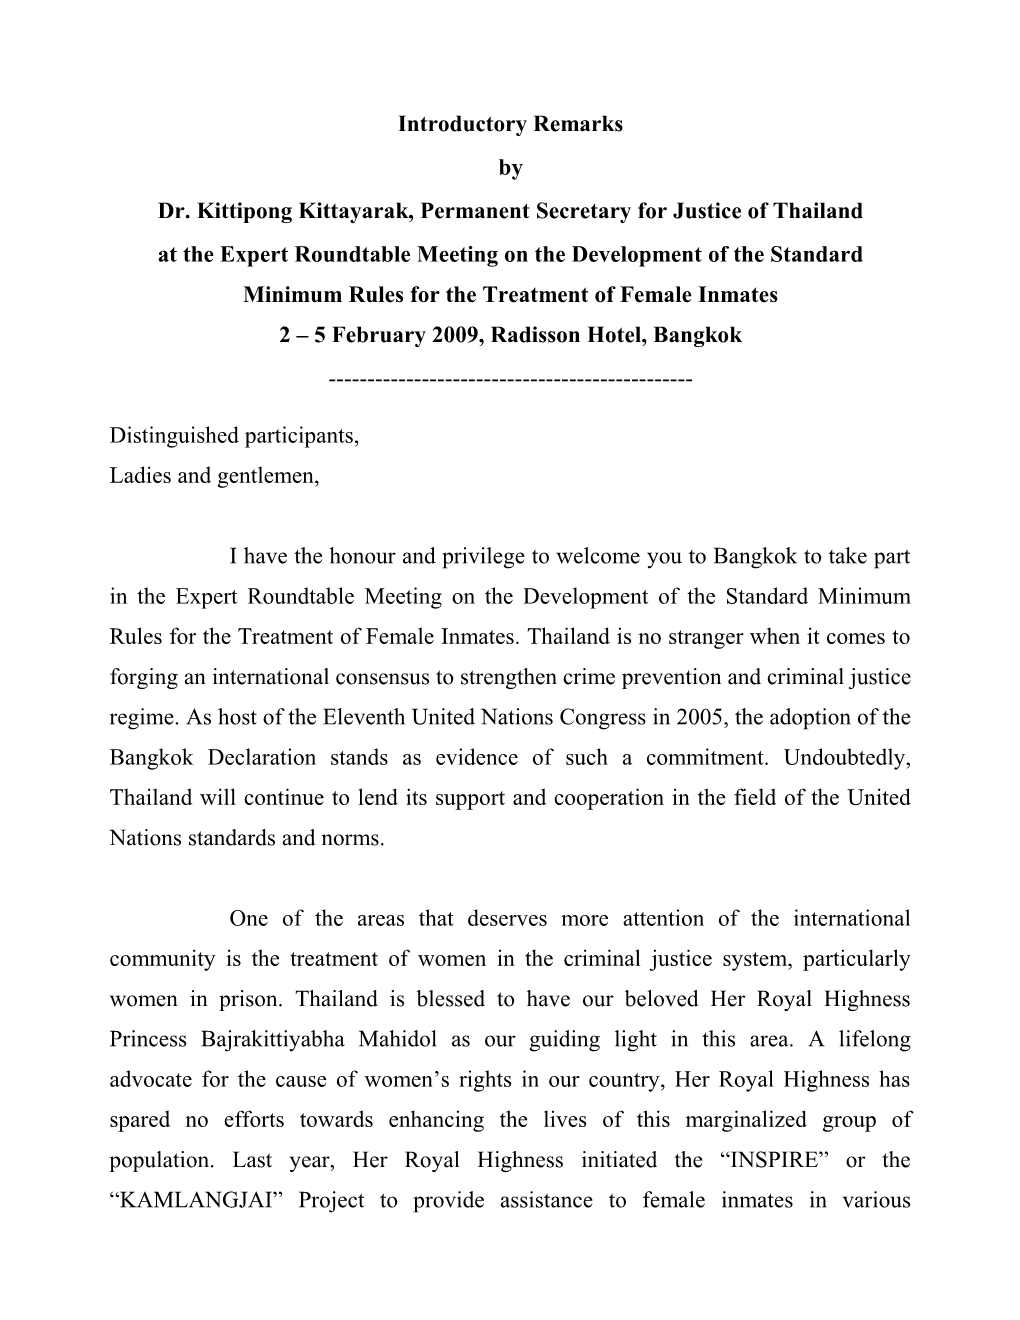 Dr. Kittipong Kittayarak, Permanent Secretary for Justice of Thailand